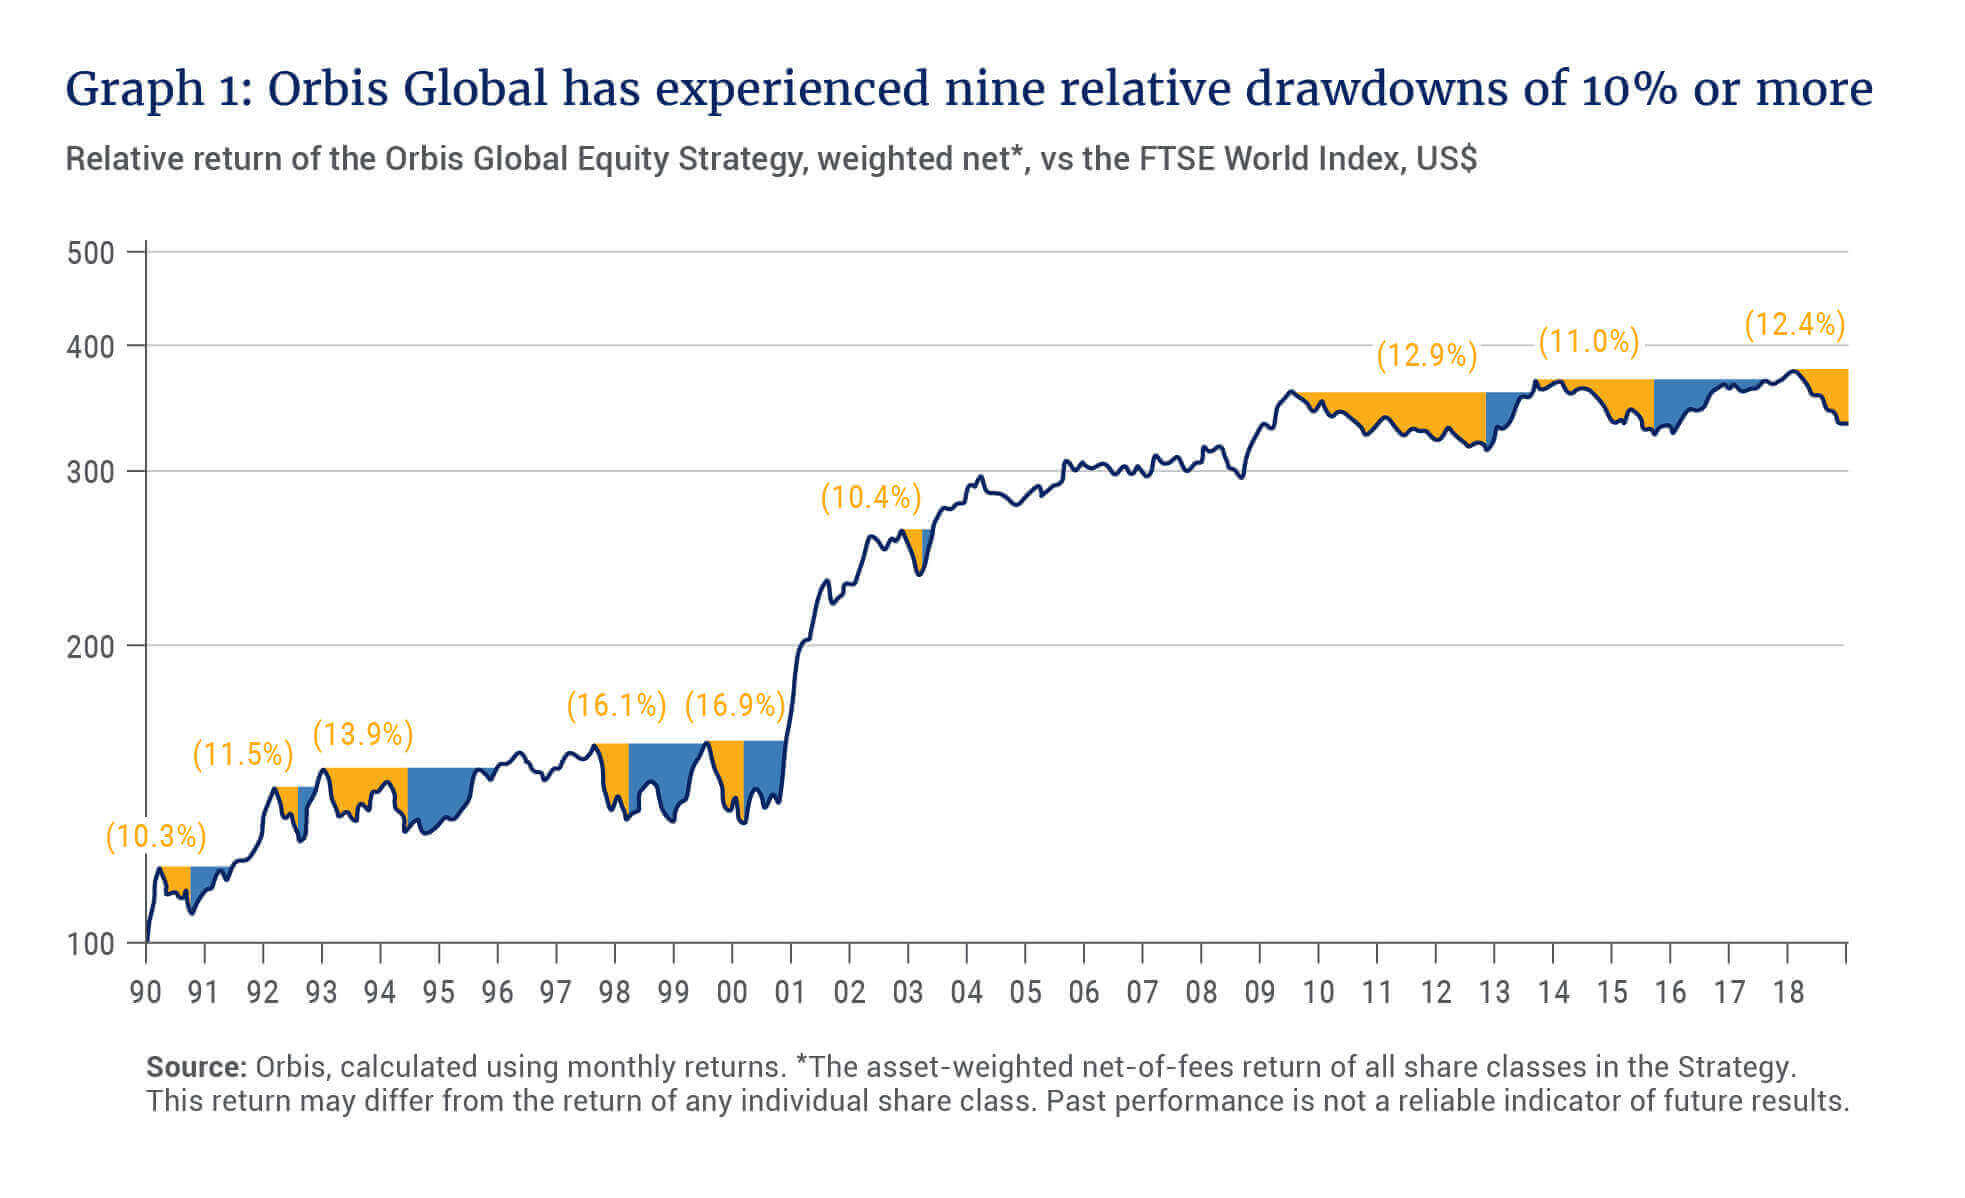 Orbis Global has experienced nine relative drawdowns of 10% or more - Allan Gray